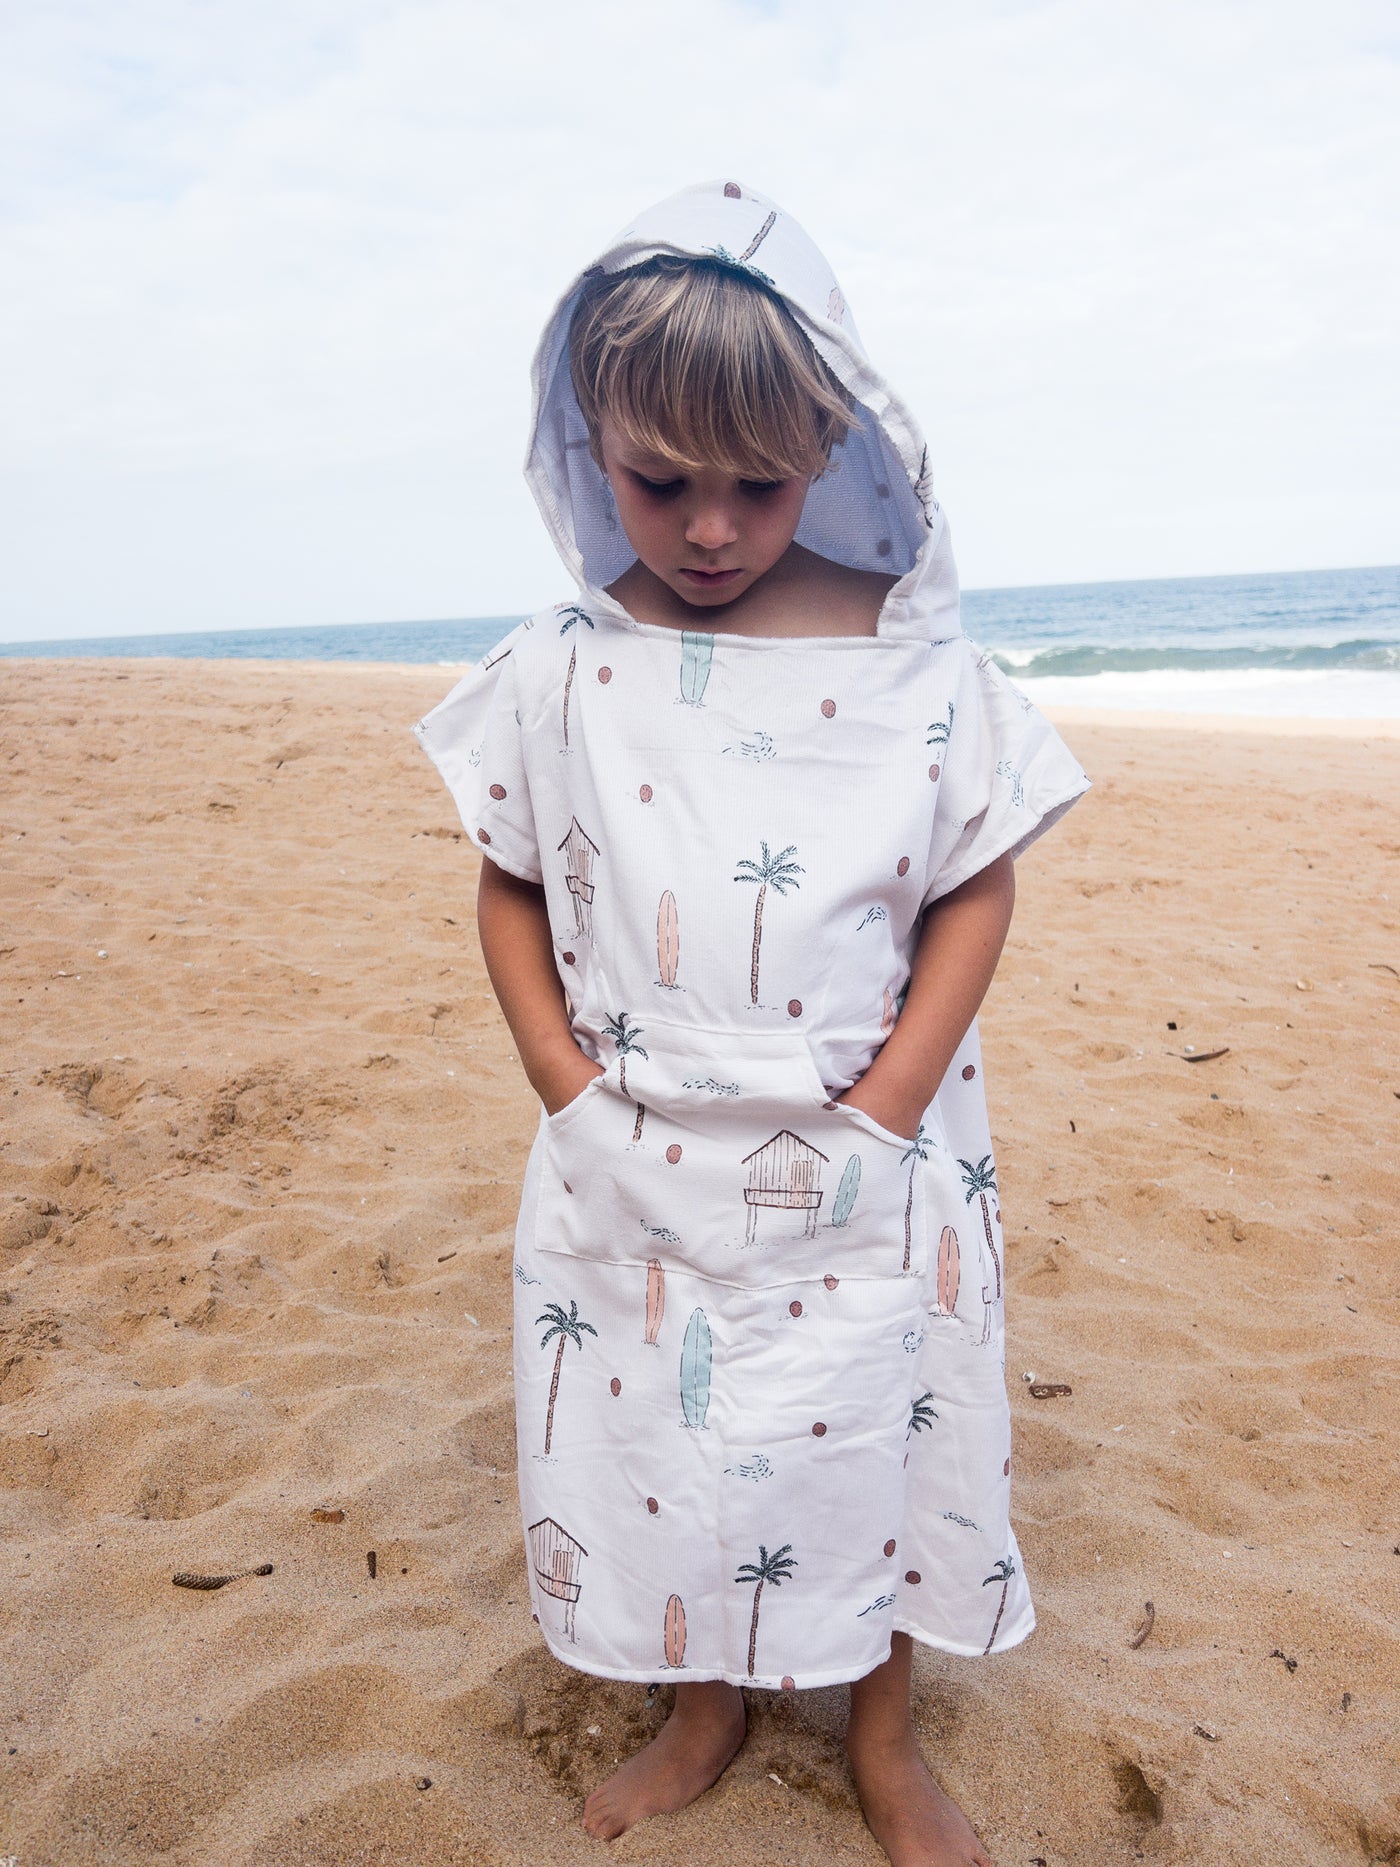 Fun kids beach towel - Surf & Summer]